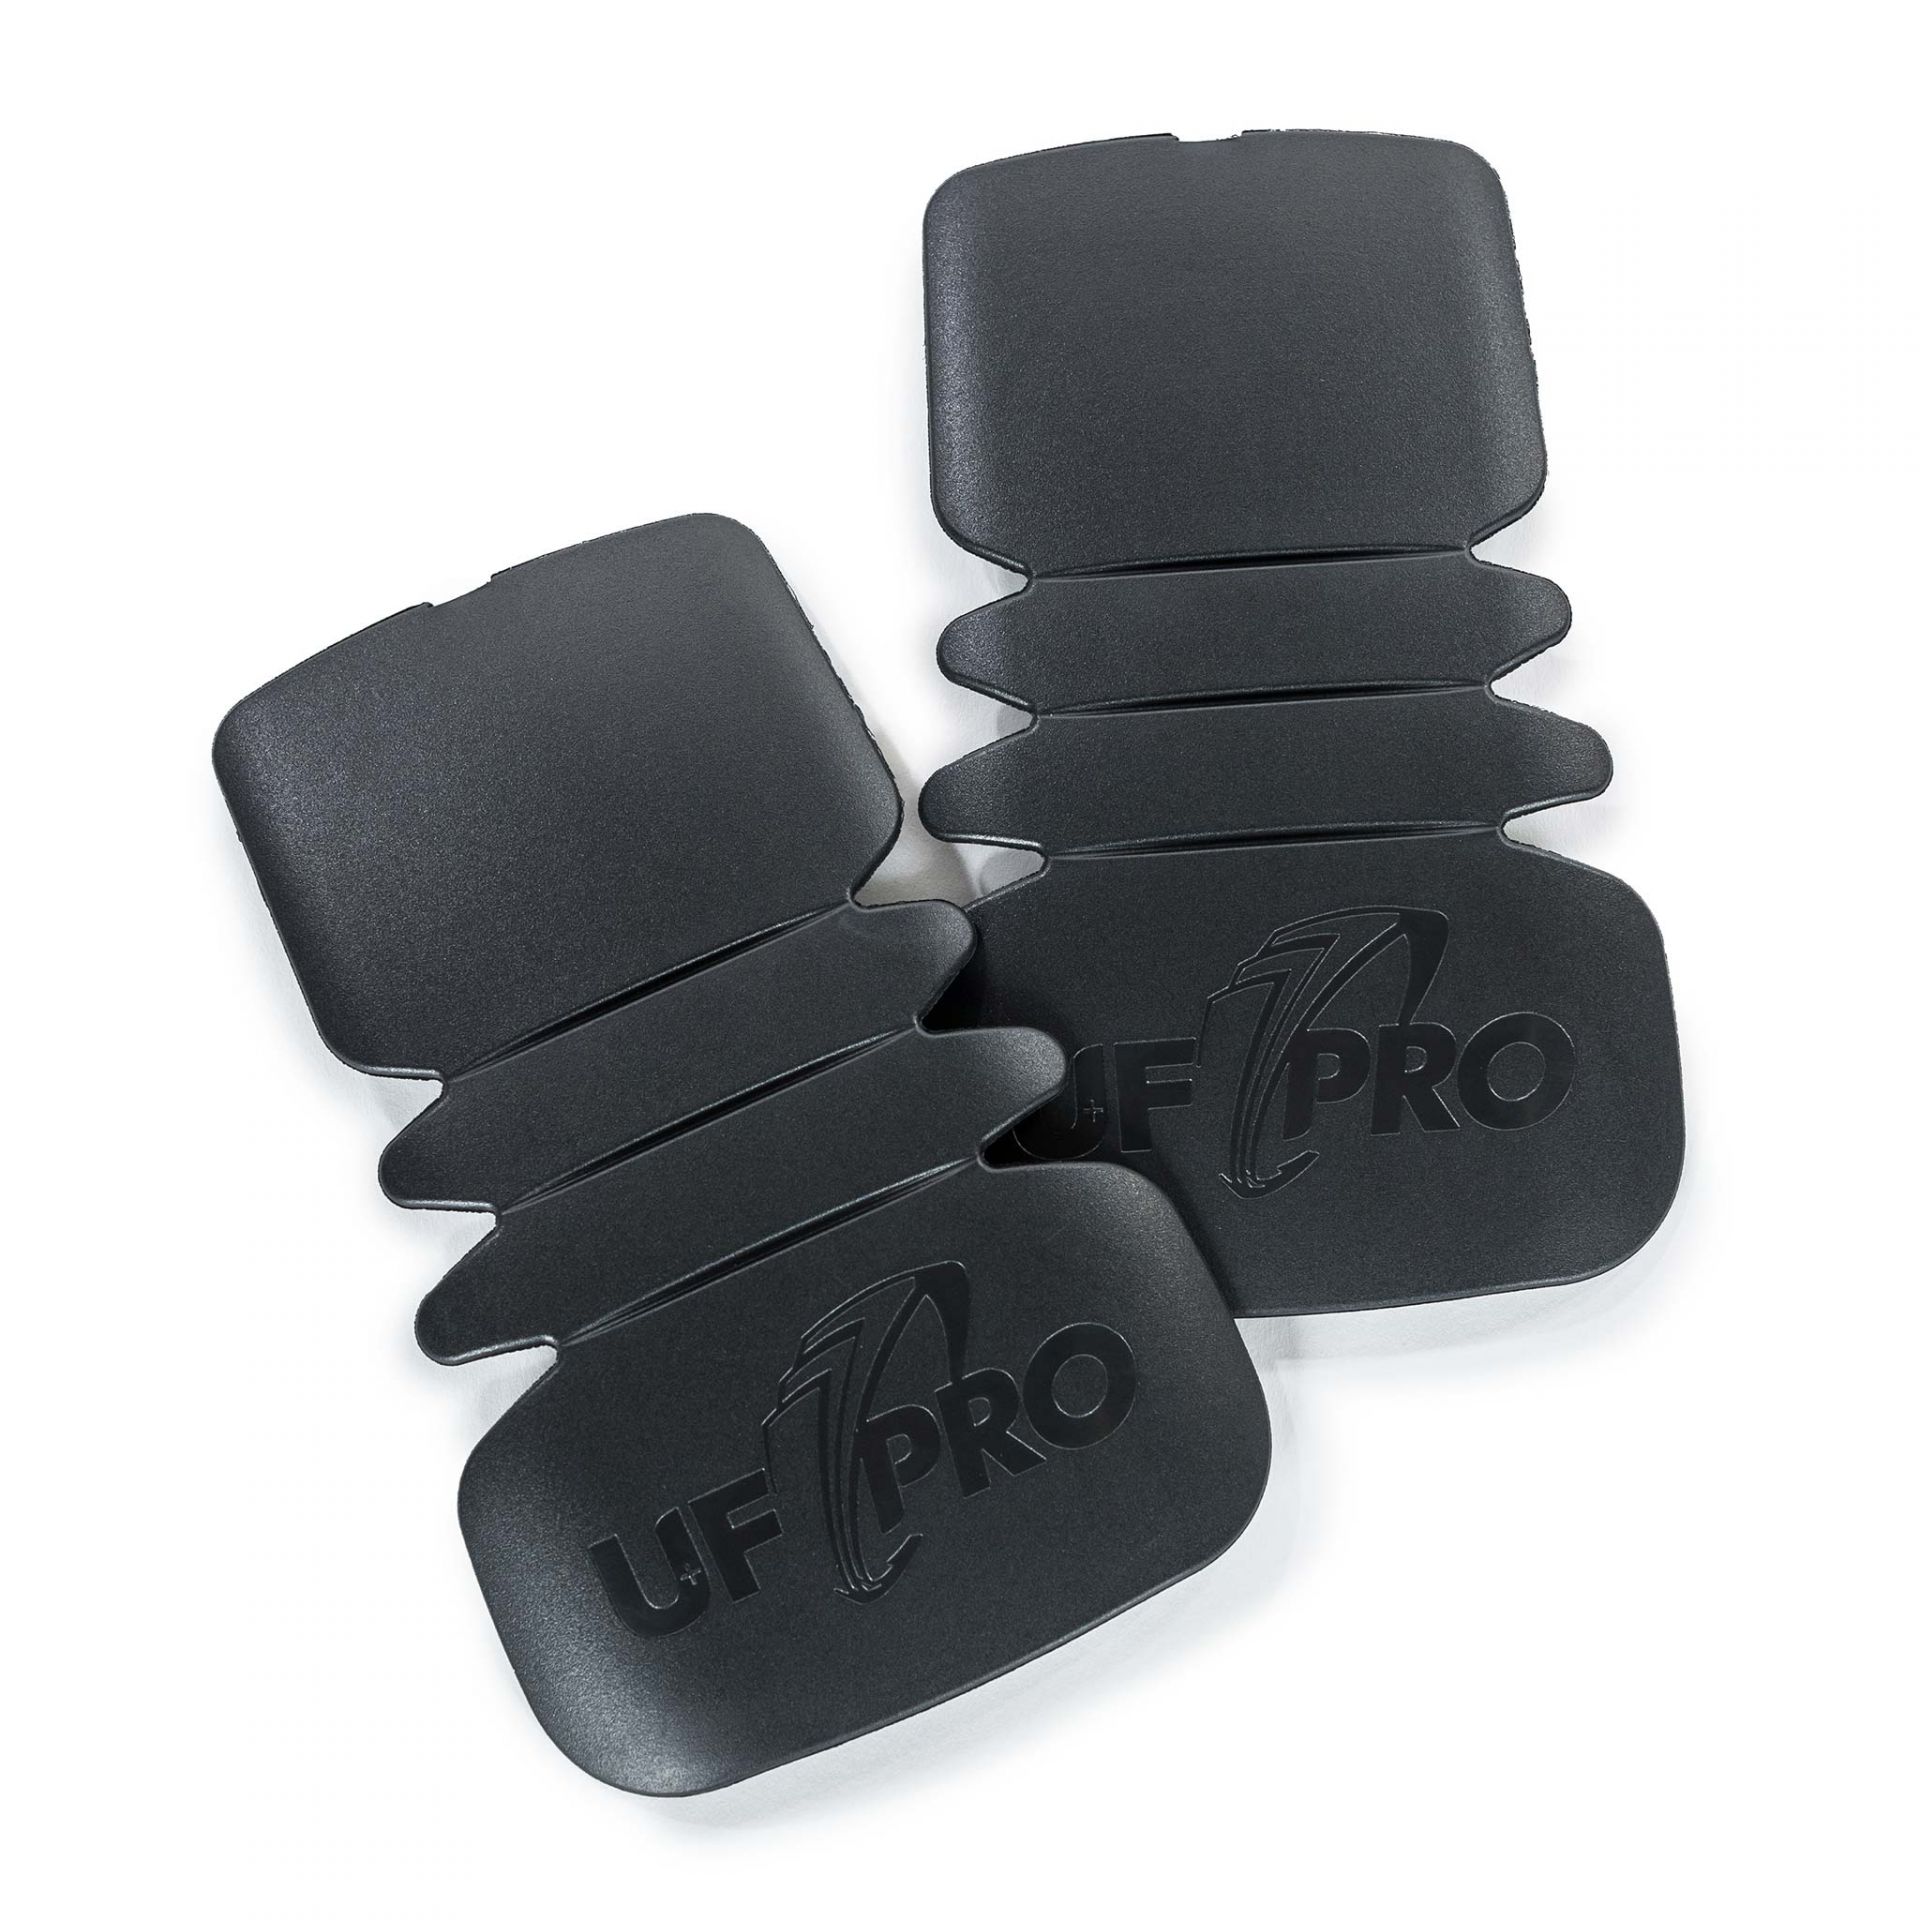 https://ufpro.com/storage/app/media/product-catalog/accessories/Solid-Knee-Pads-hero.jpeg